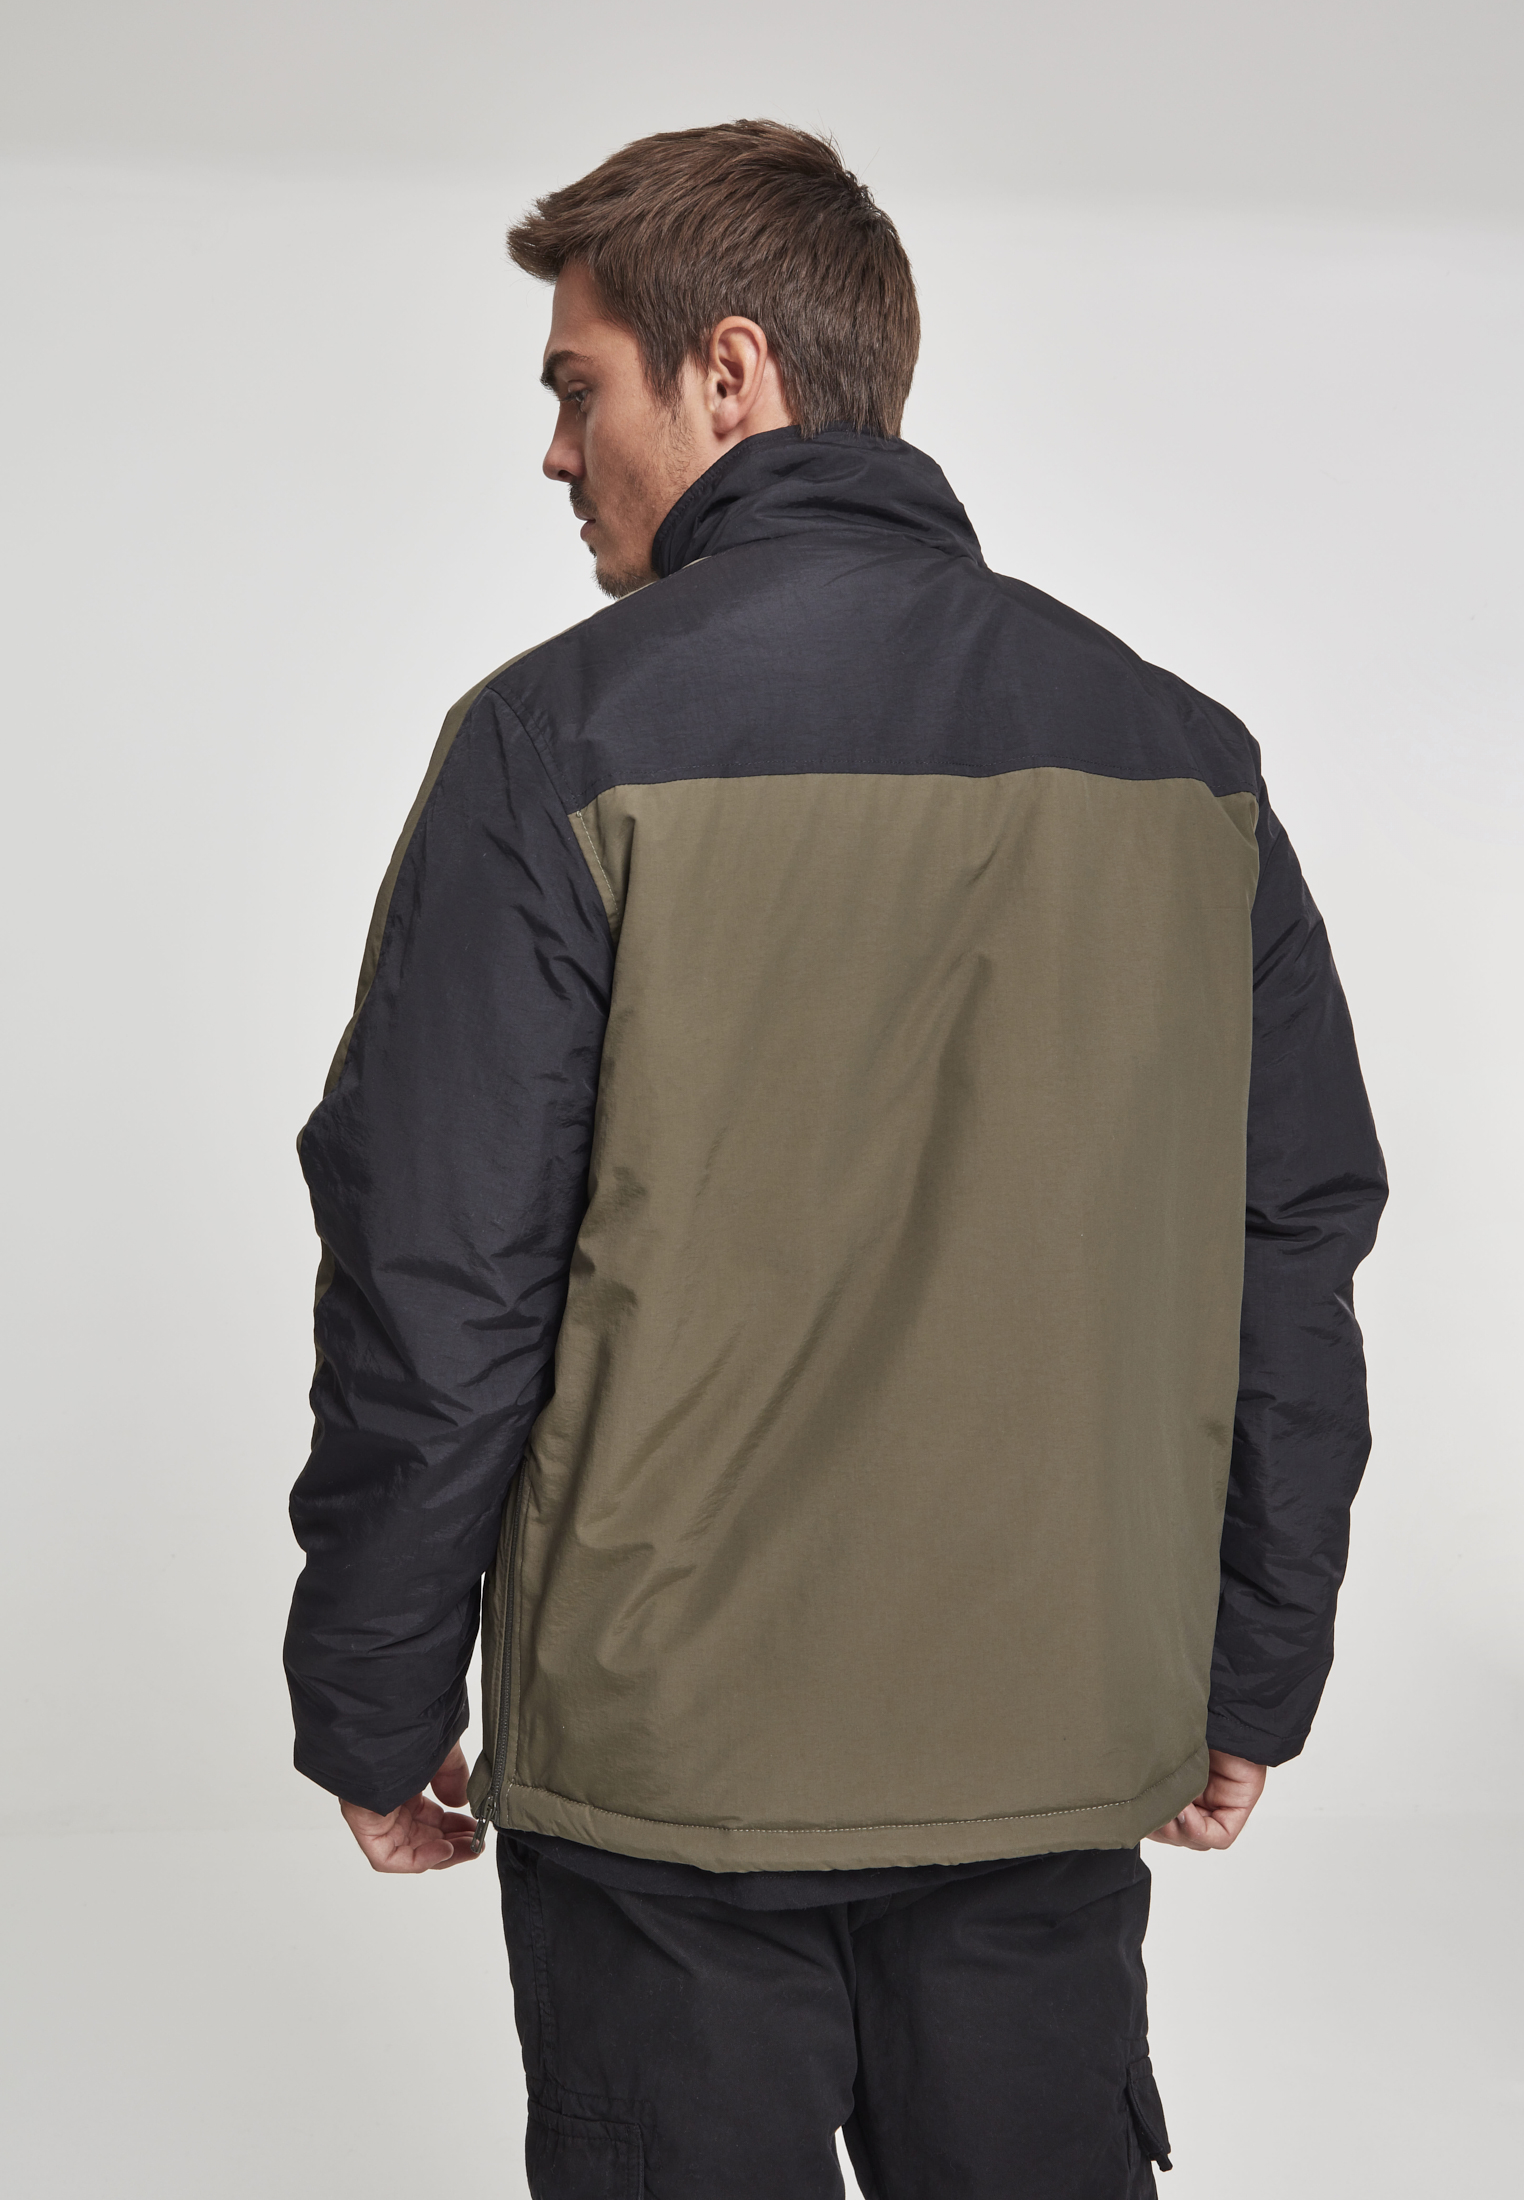 Winter Jacken 2-Tone Padded Pull Over Jacket in Farbe darkolive/black